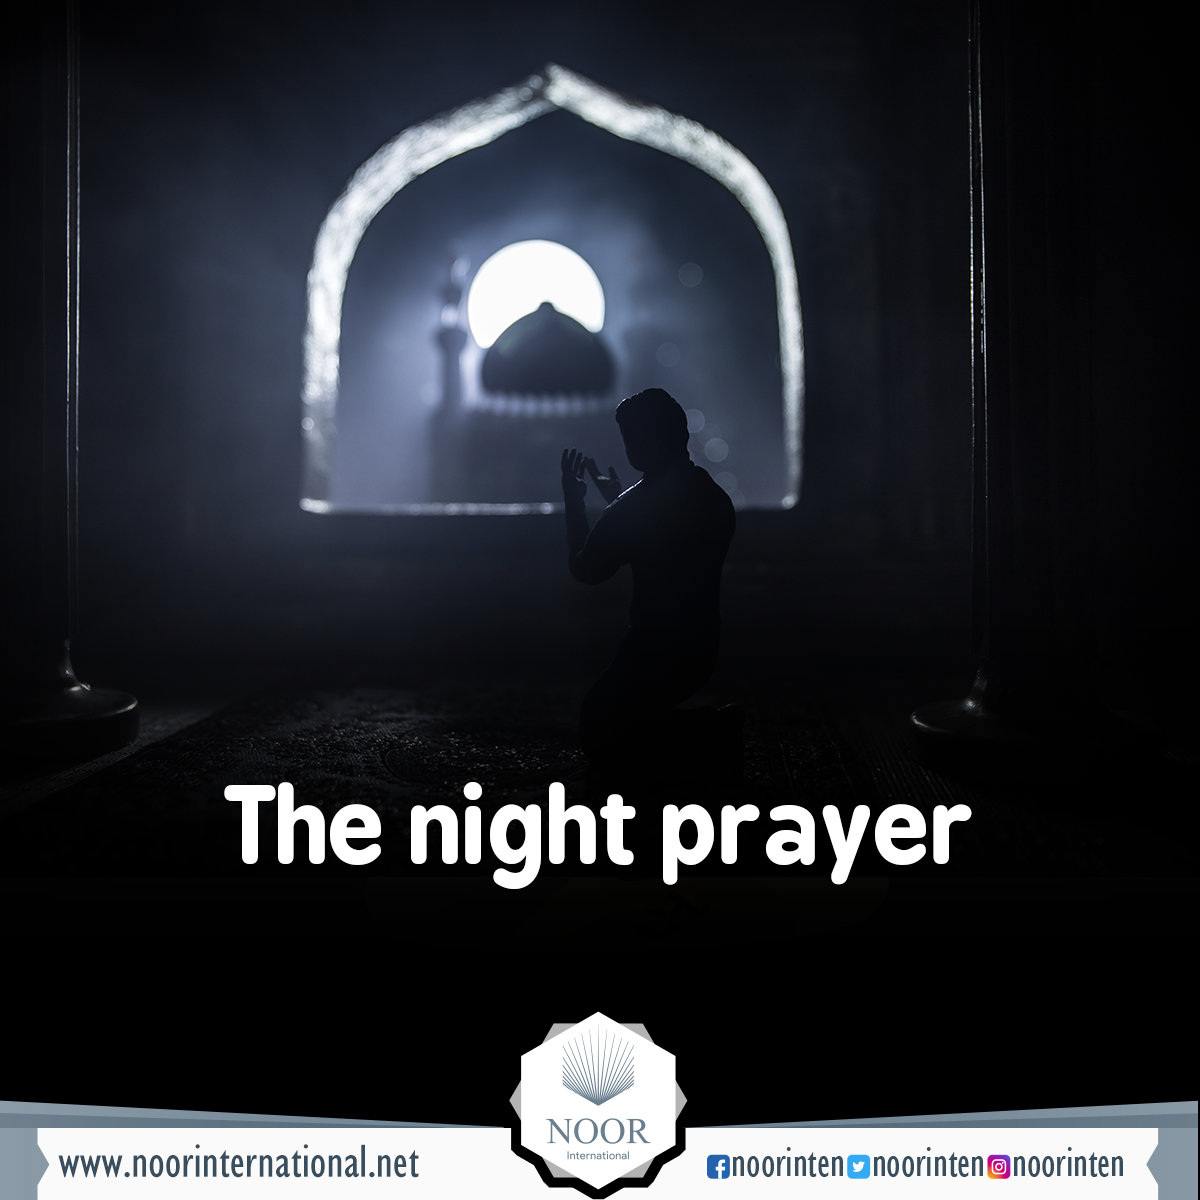 The night prayer